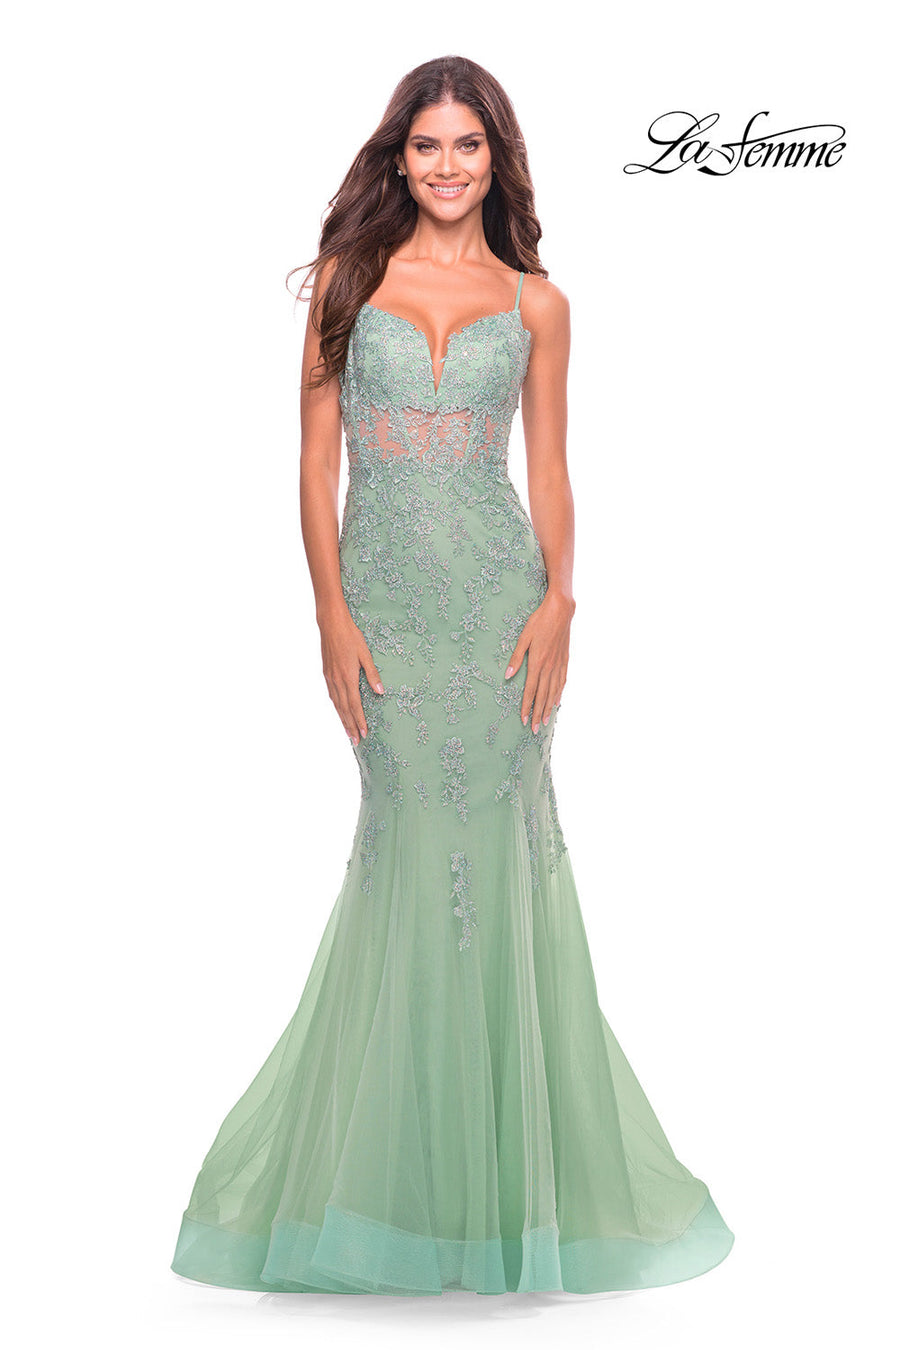 La Femme 31579 prom dress images.  La Femme 31579 is available in these colors: Cloud Blue, Sage.